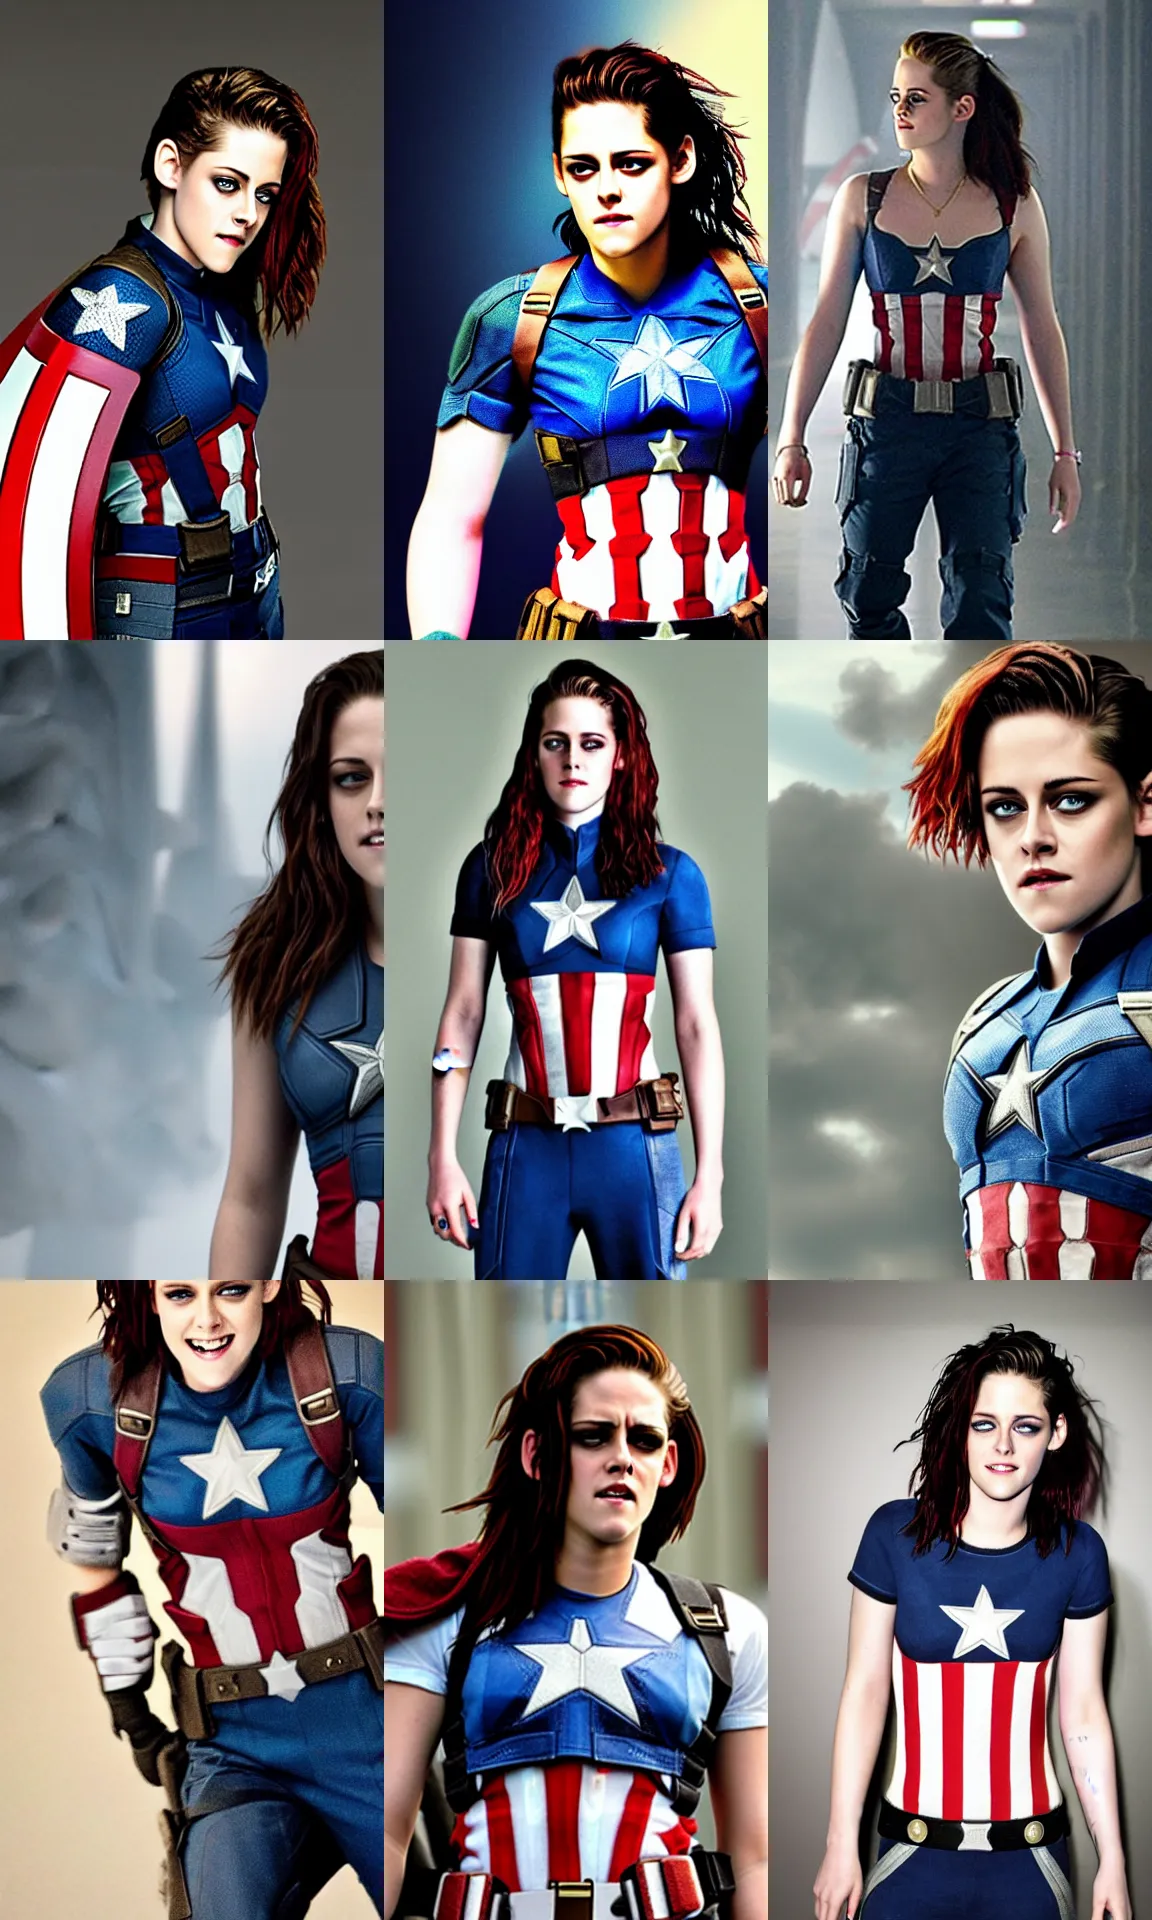 Prompt: Kristen Stewart as Captain America, smiling